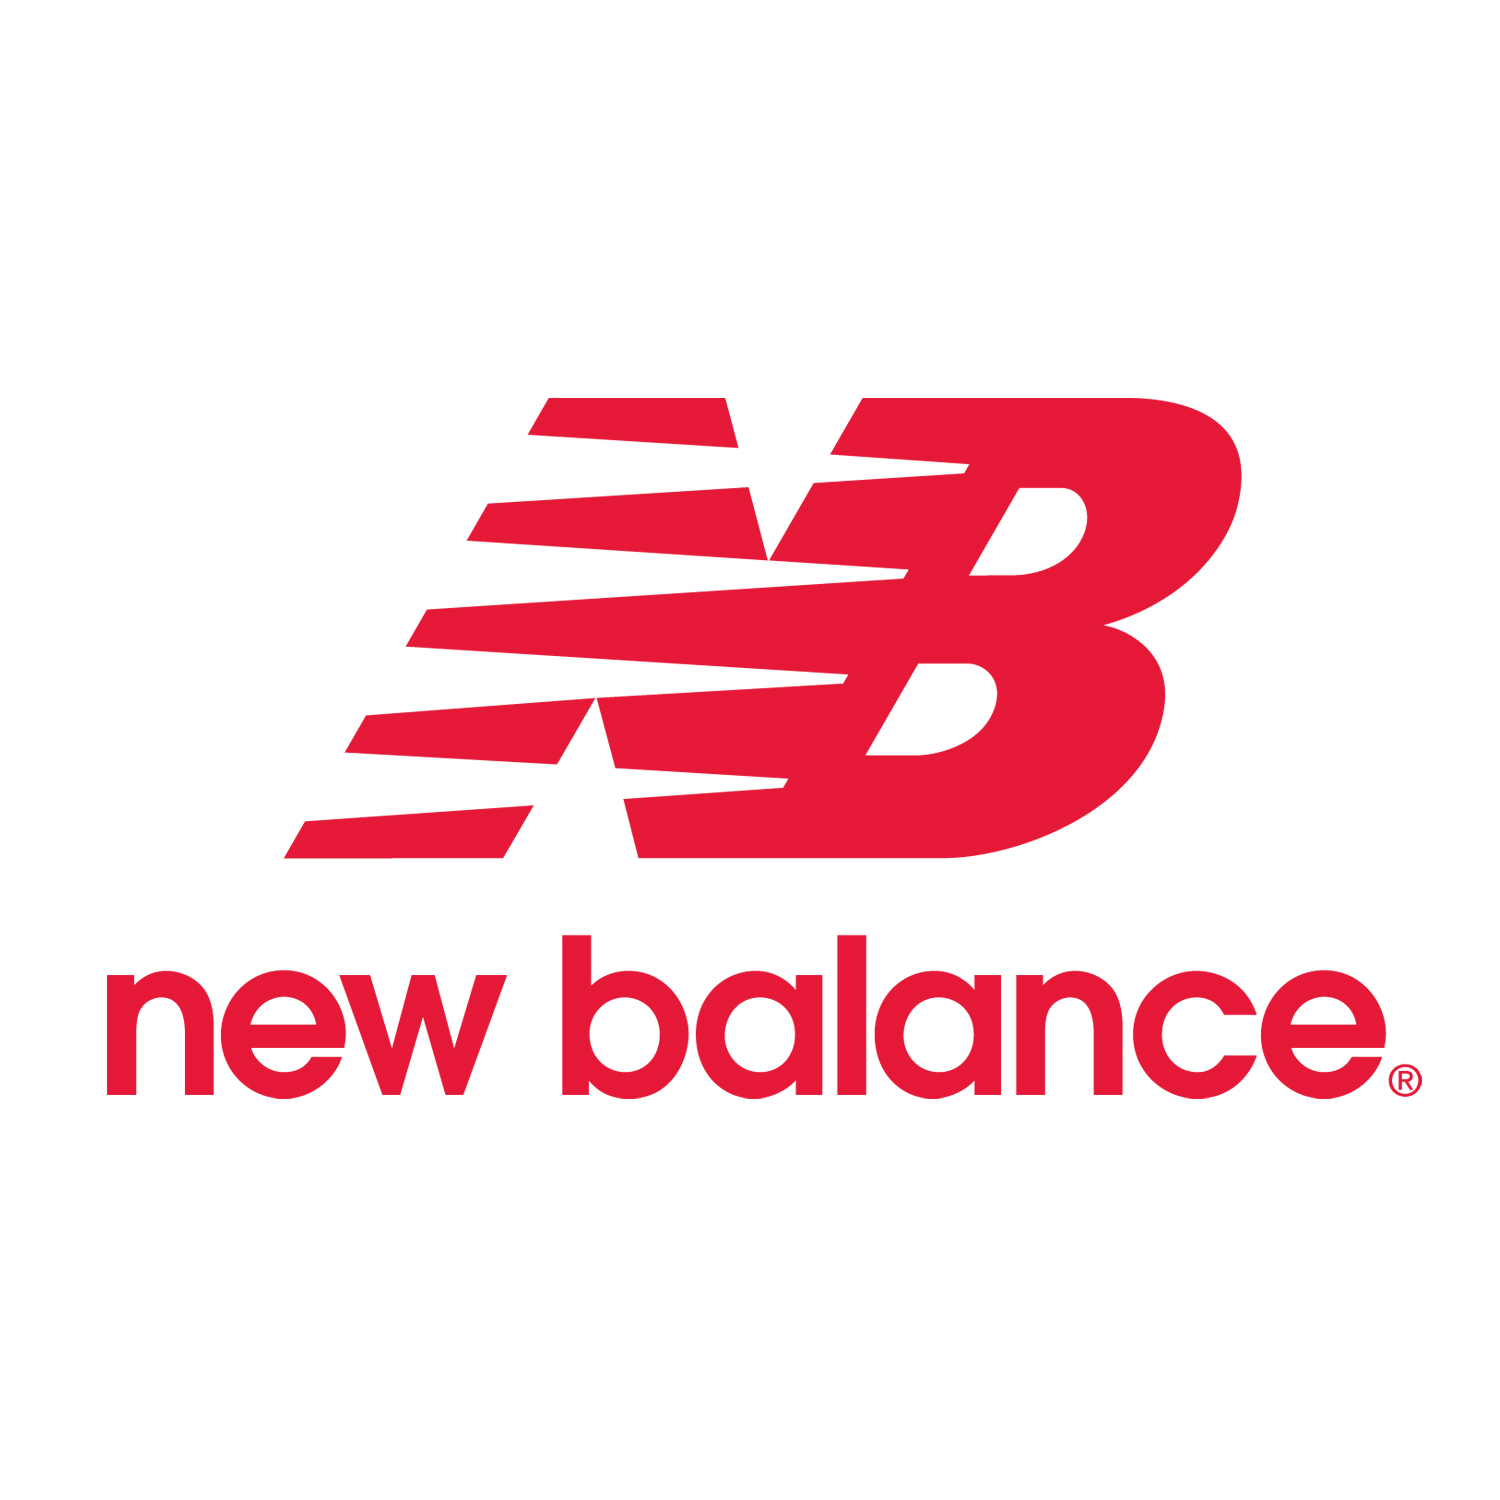 new balance business